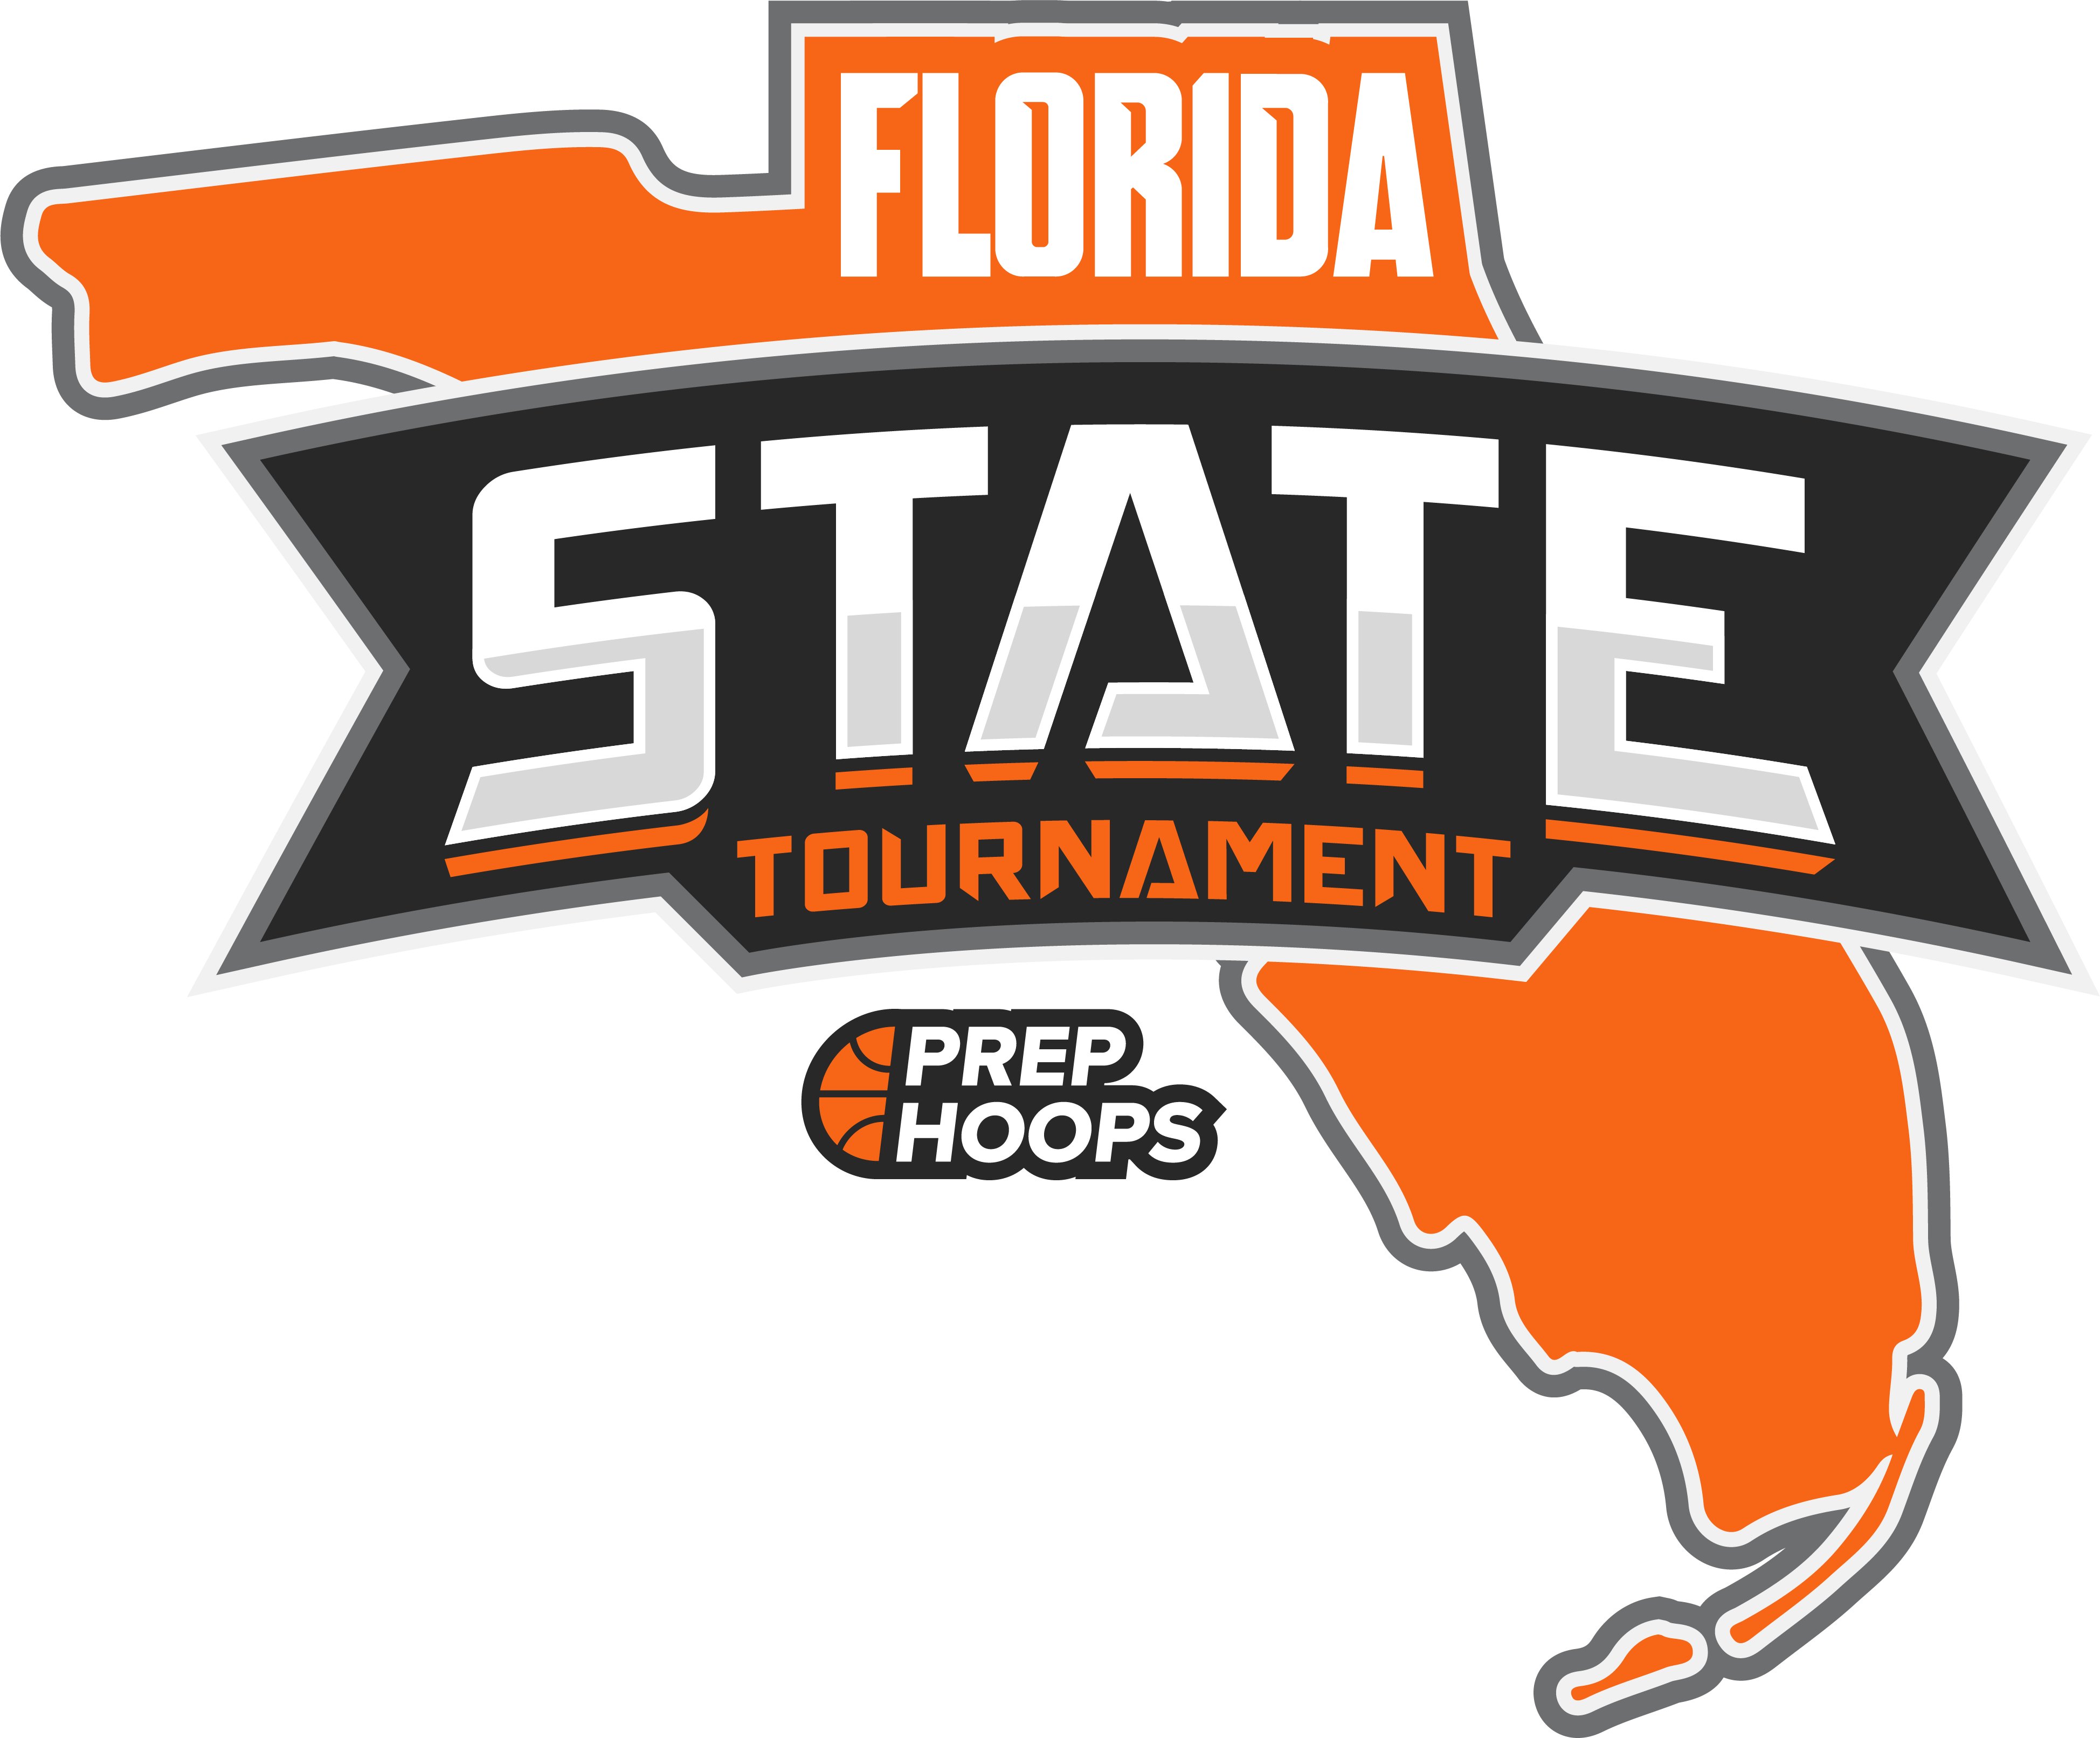 Florida State Tournament